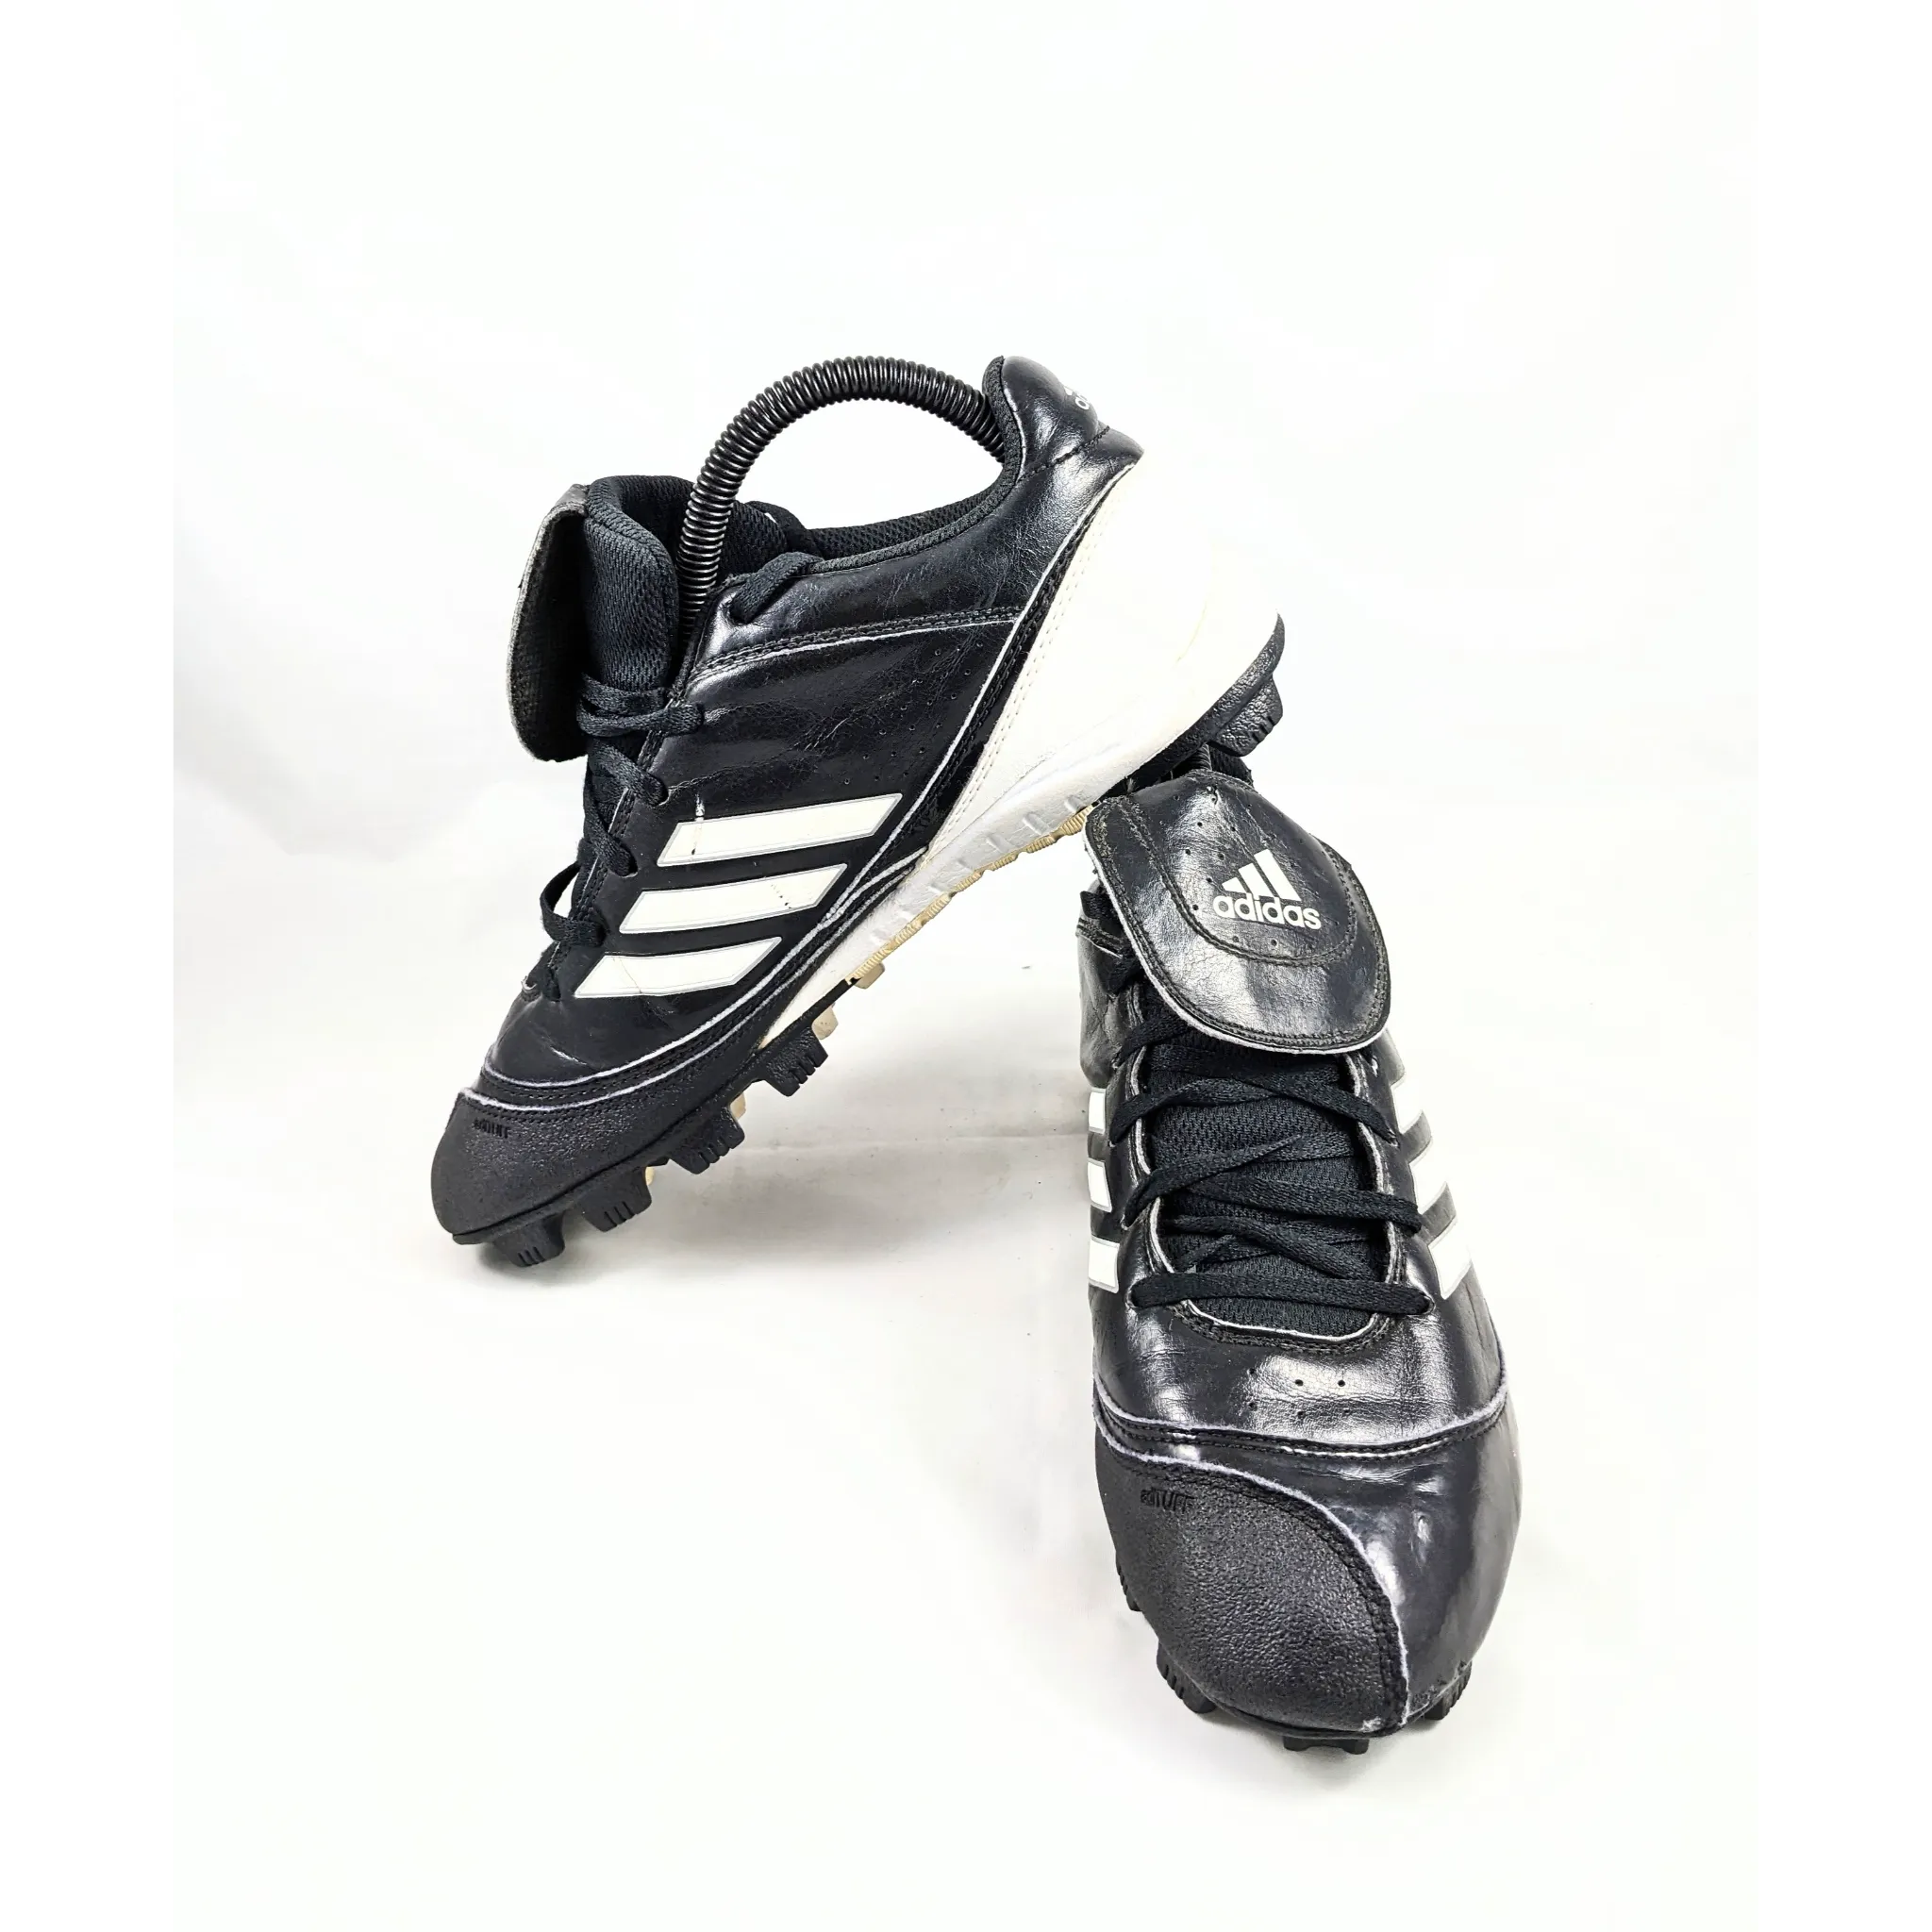 Adidas Black Preloved Sport Stud Shoes